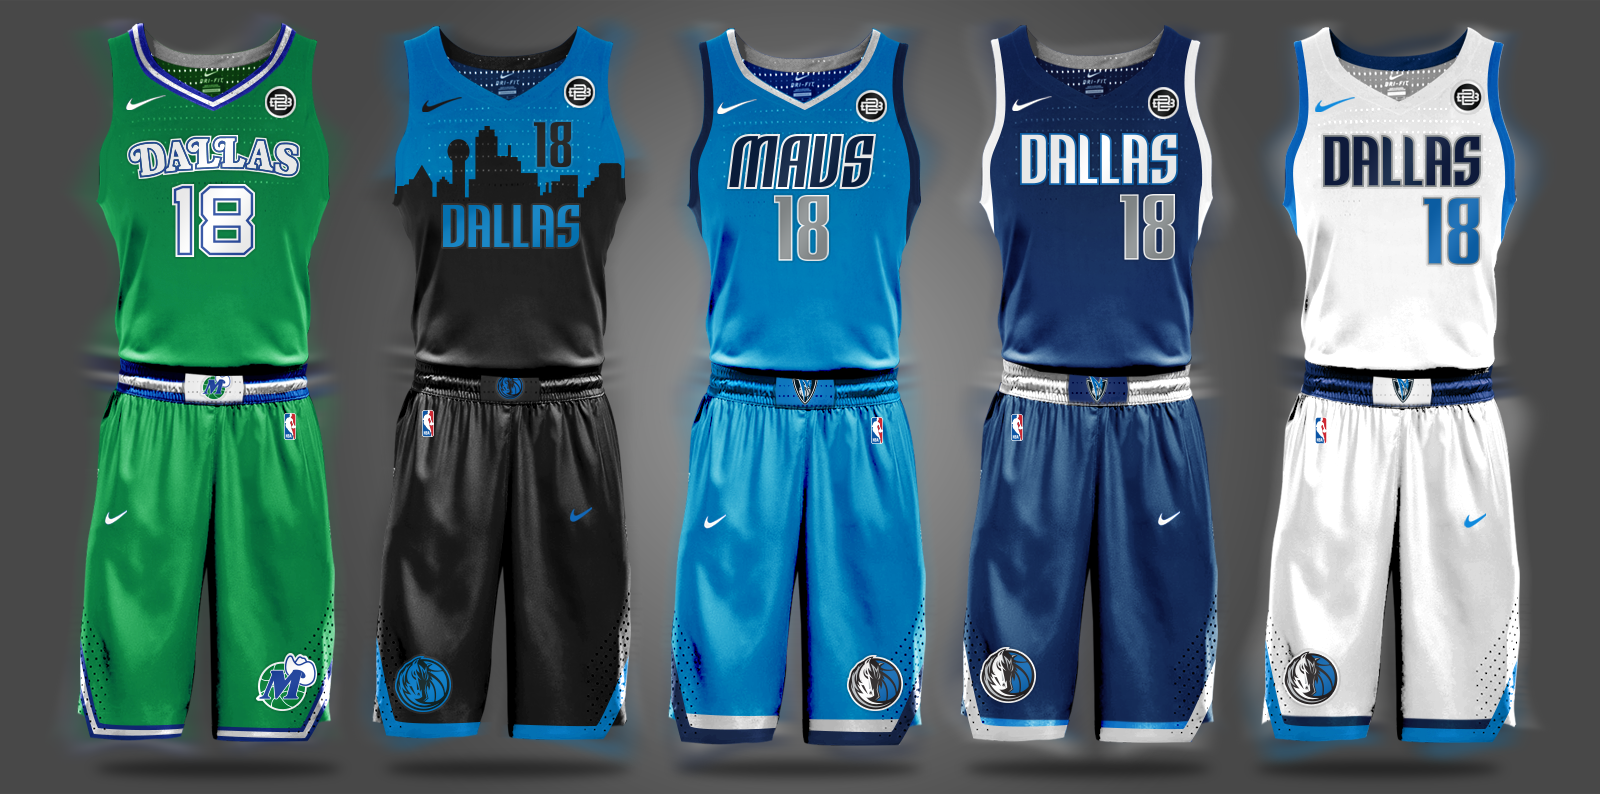 Dallas Mavs Uniforms002 